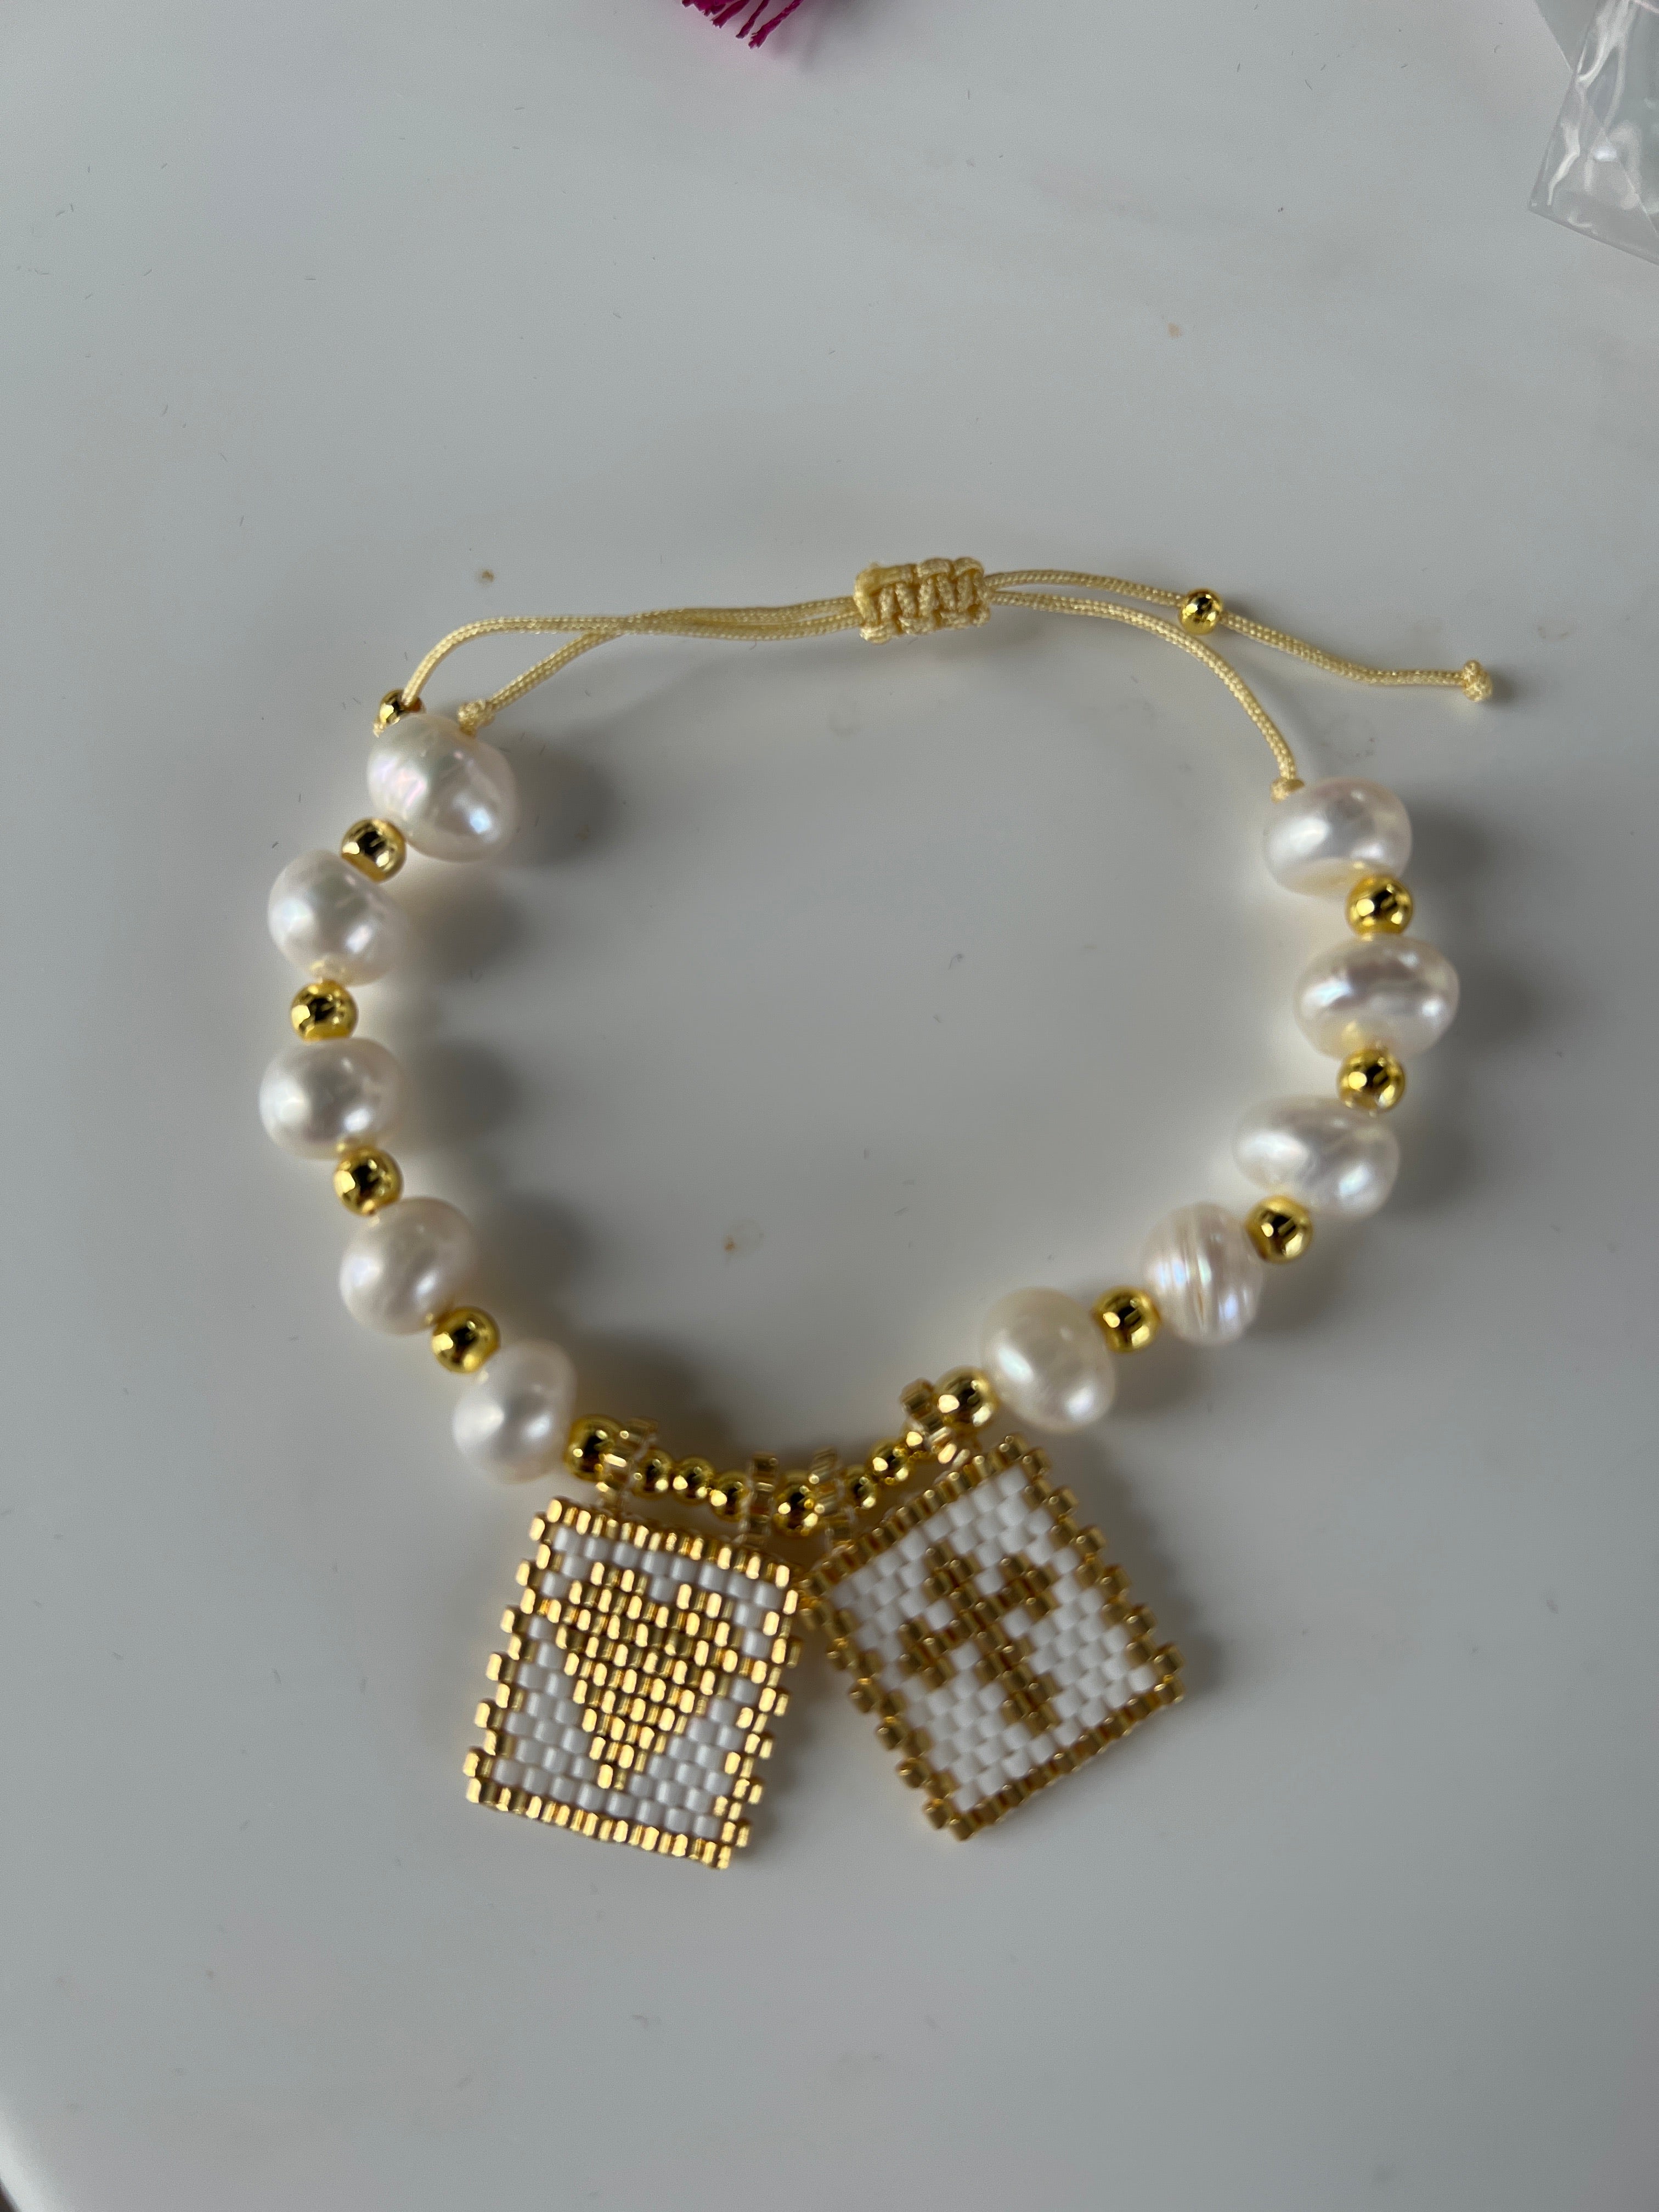 Pearl bracelet heart pendant miyuki and cross